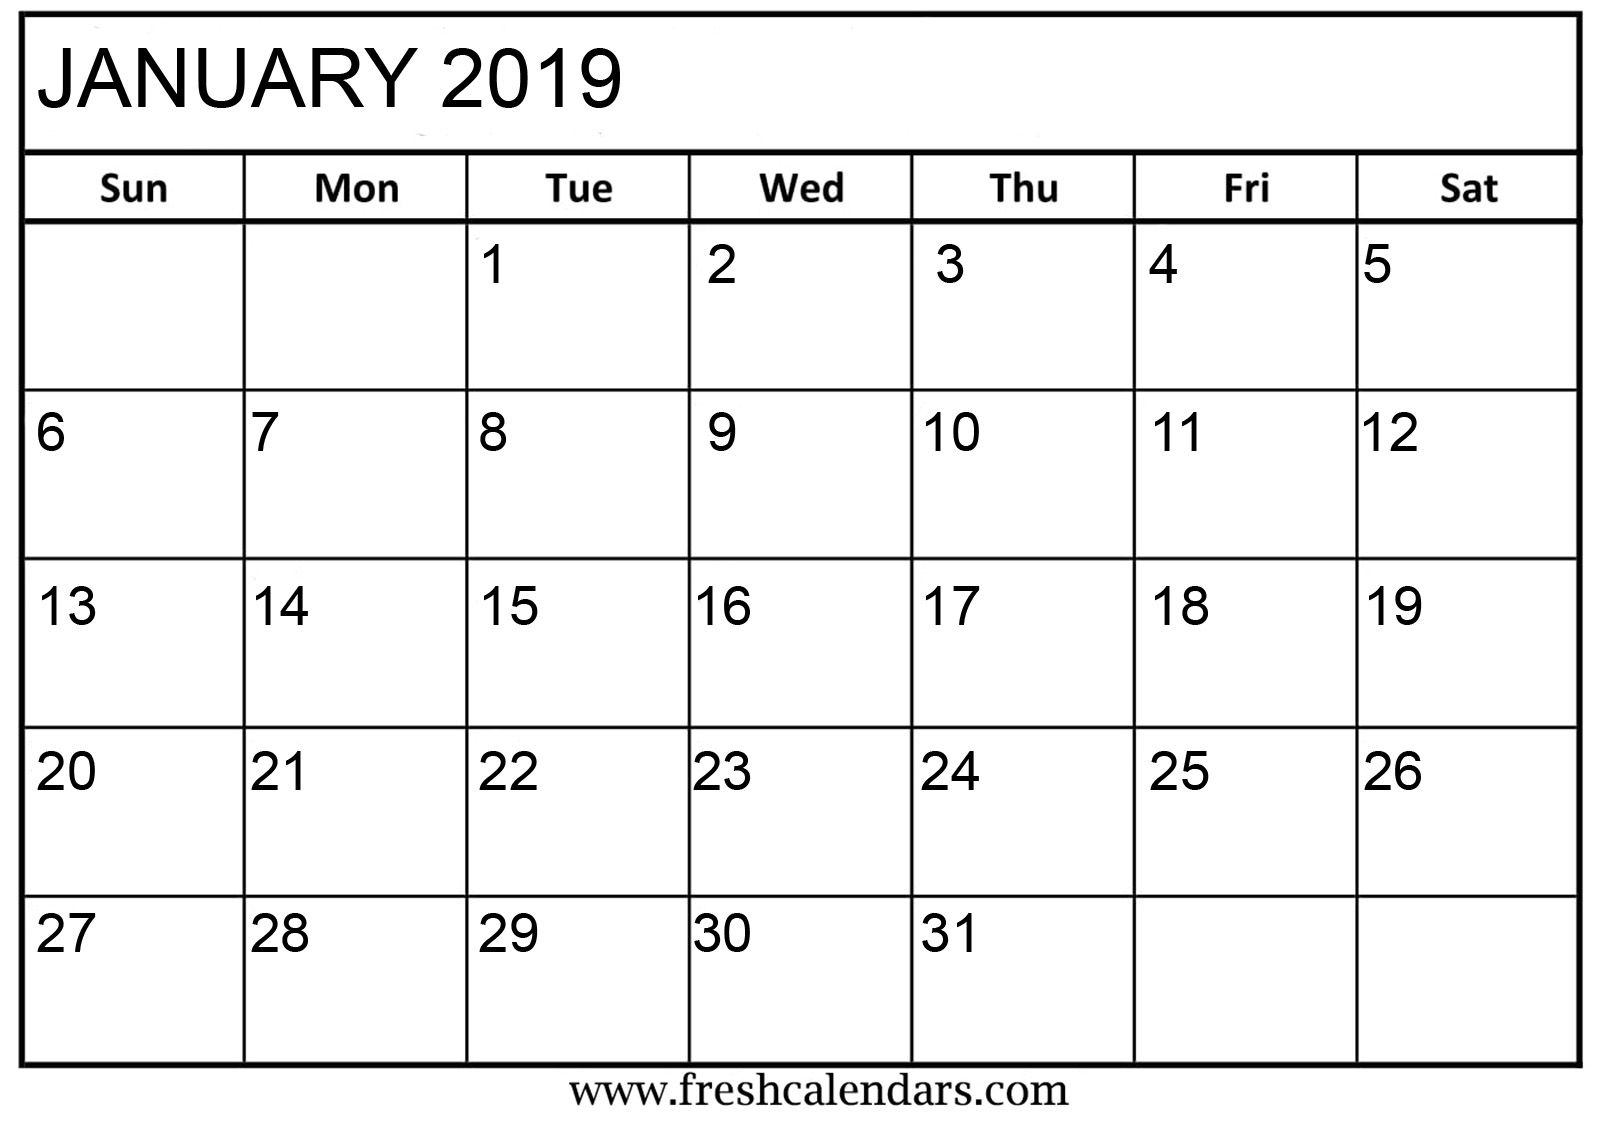 January 2019 Monthly Calendar